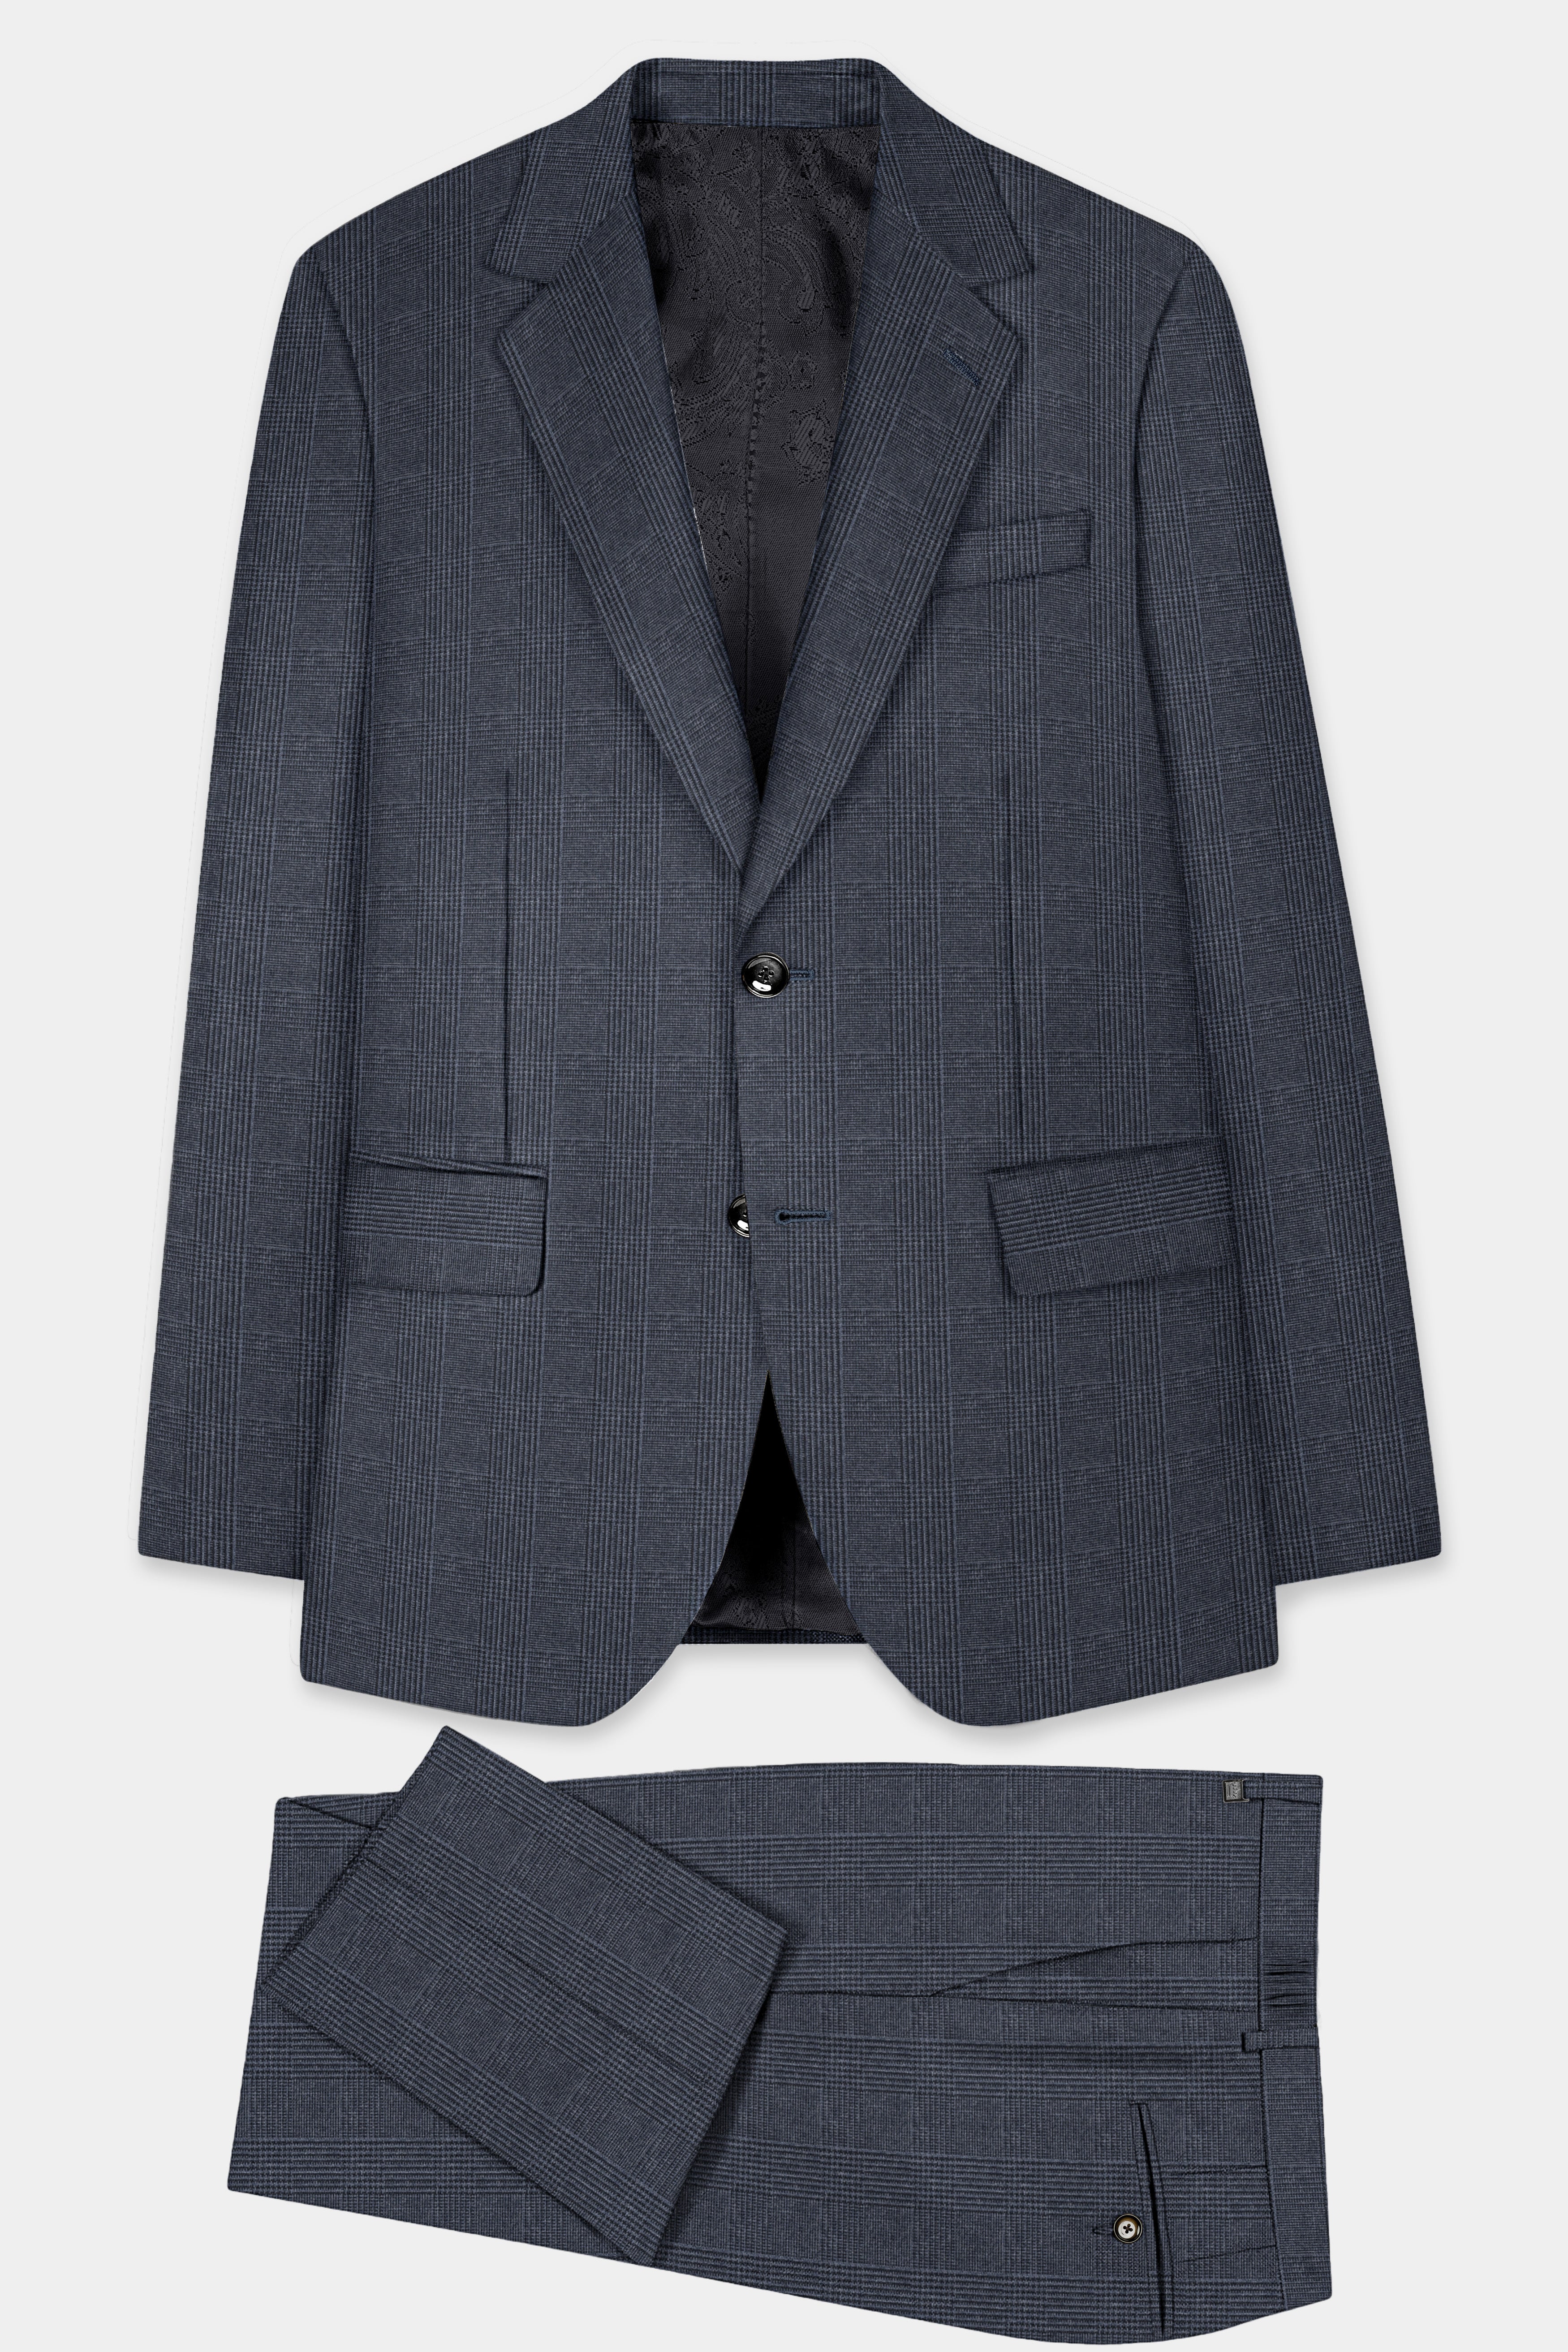 Gun Powder Gray Plaid Wool Blend Suit